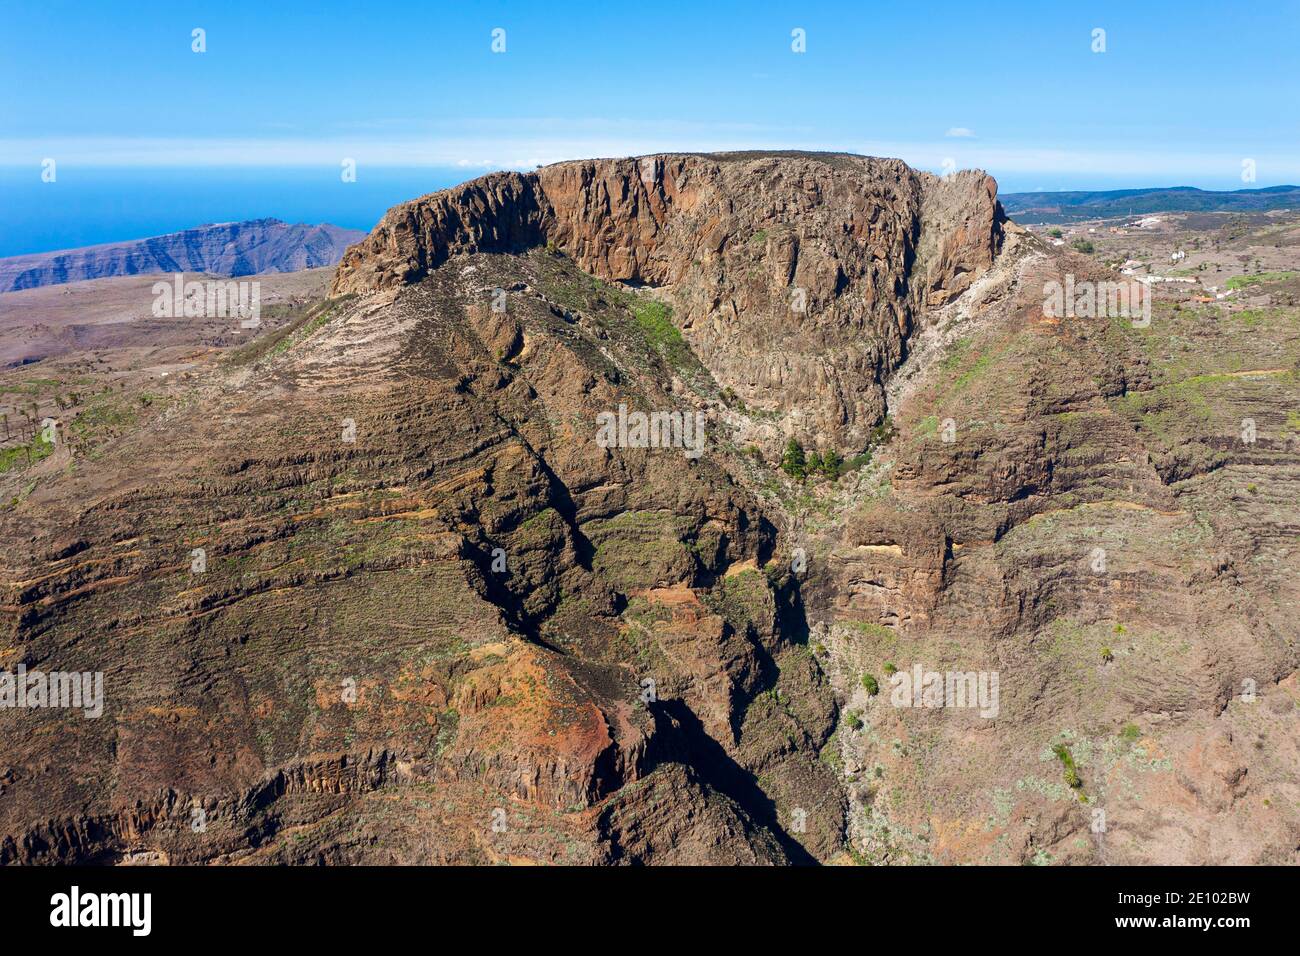 Table Mountain Fortaleza, Barranco de Erque, drone image, La Gomera, Canary Islands, Spain, Europe Stock Photo